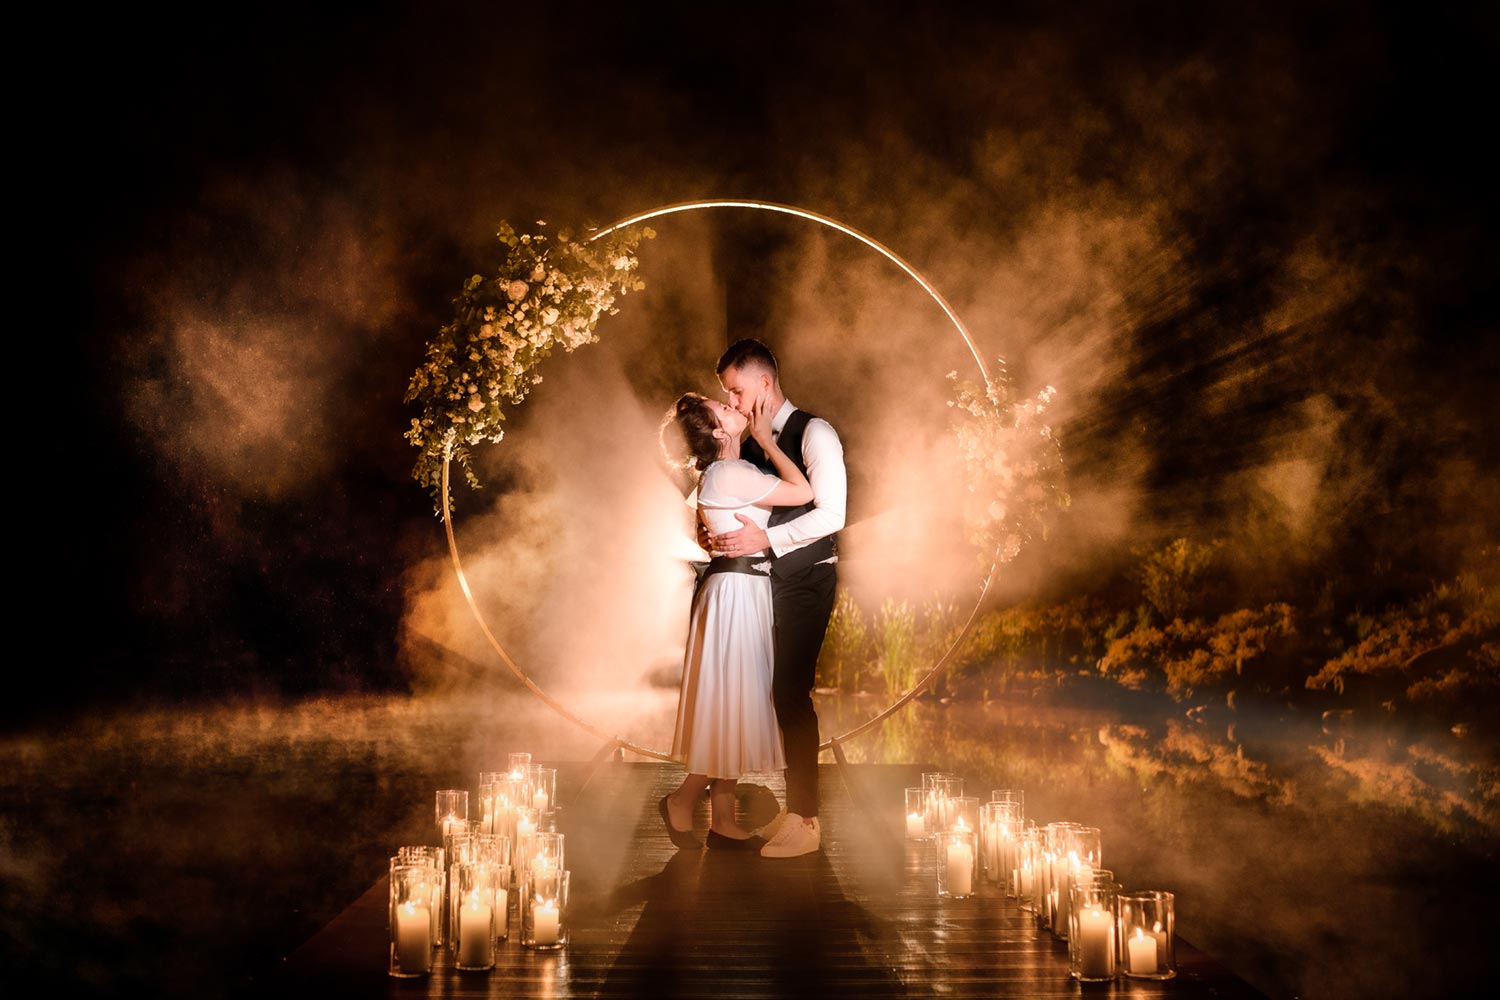 night wedding portrait of bride and groom jindrich nejedly prague wedding photographer